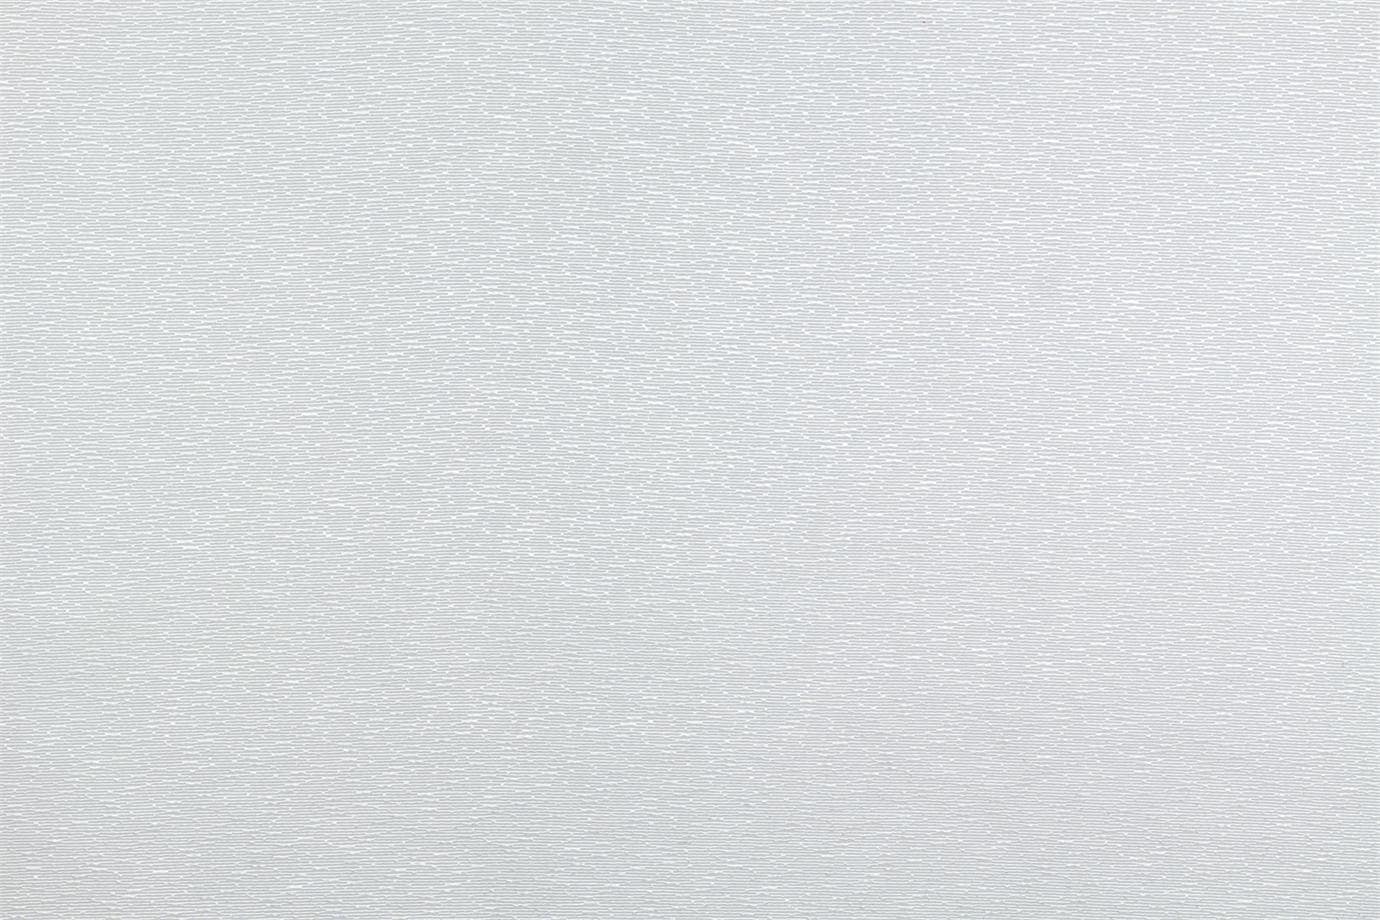 Tessuto per arredamento J1624 DIECI 001 Bianco